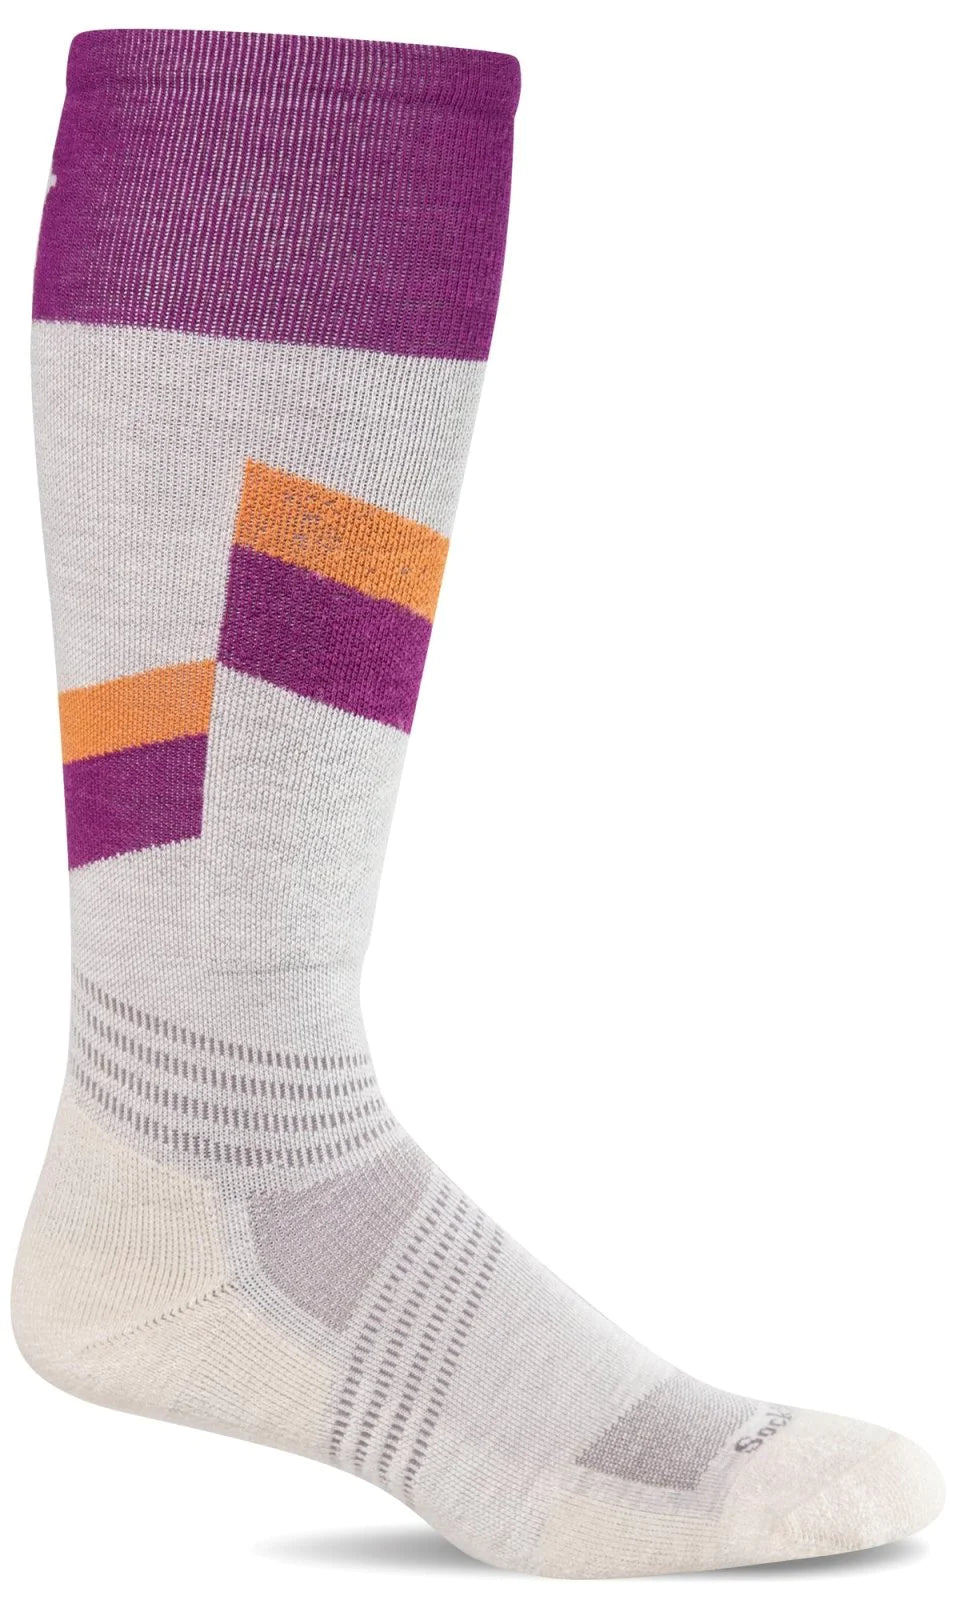 SockWell, Steep Socks, Natural